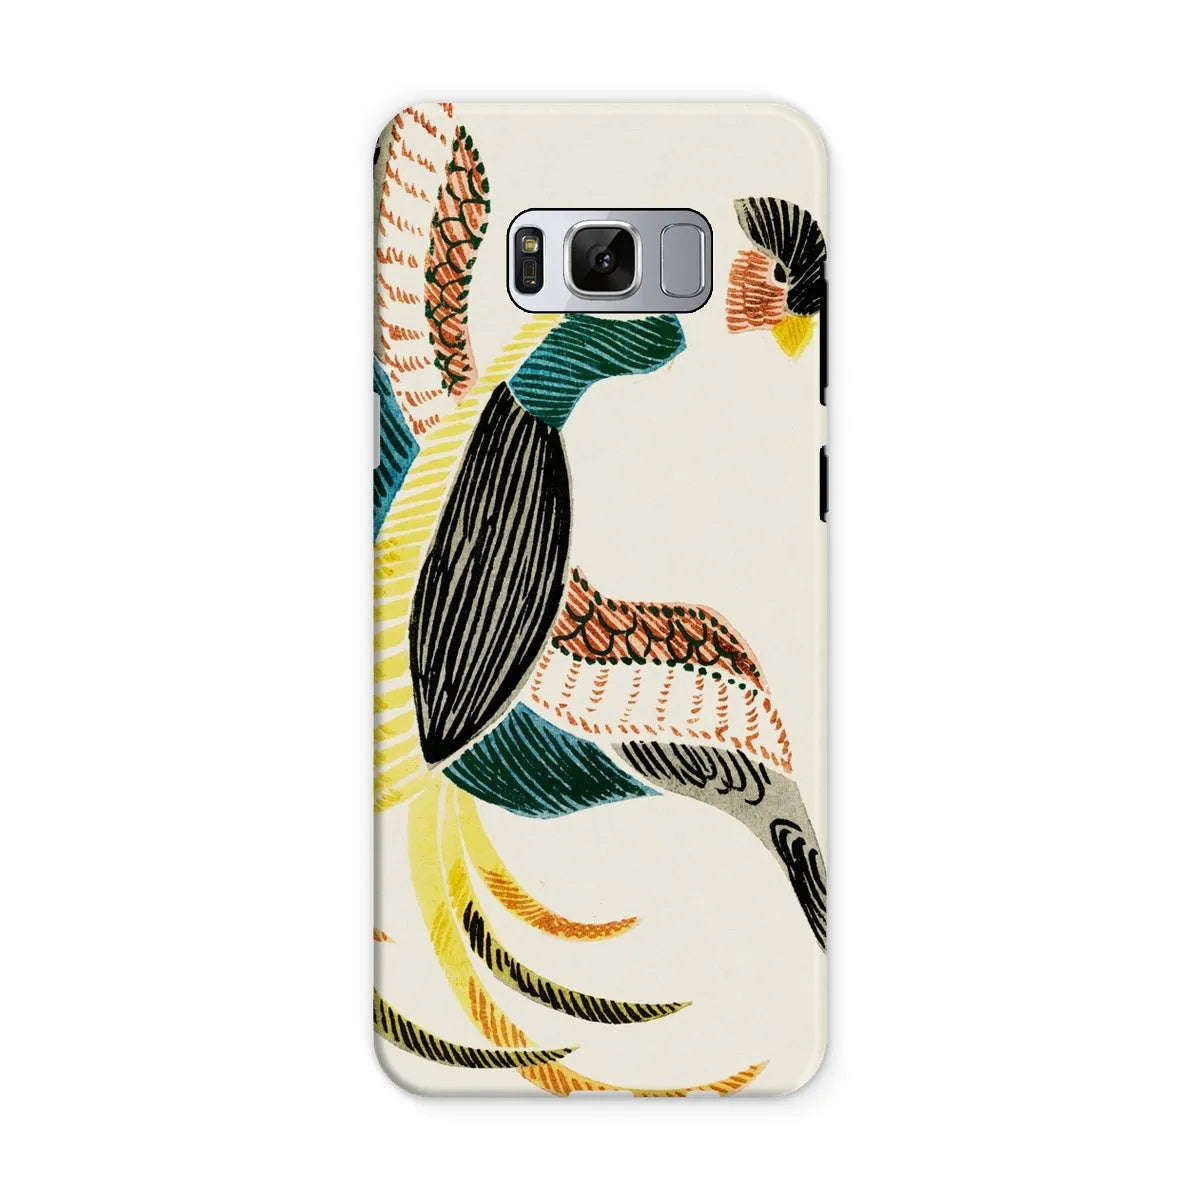 Woodblock Crane - Japanese Bird Phone Case - Taguchi Tomoki - Samsung Galaxy S8 / Matte - Mobile Phone Cases